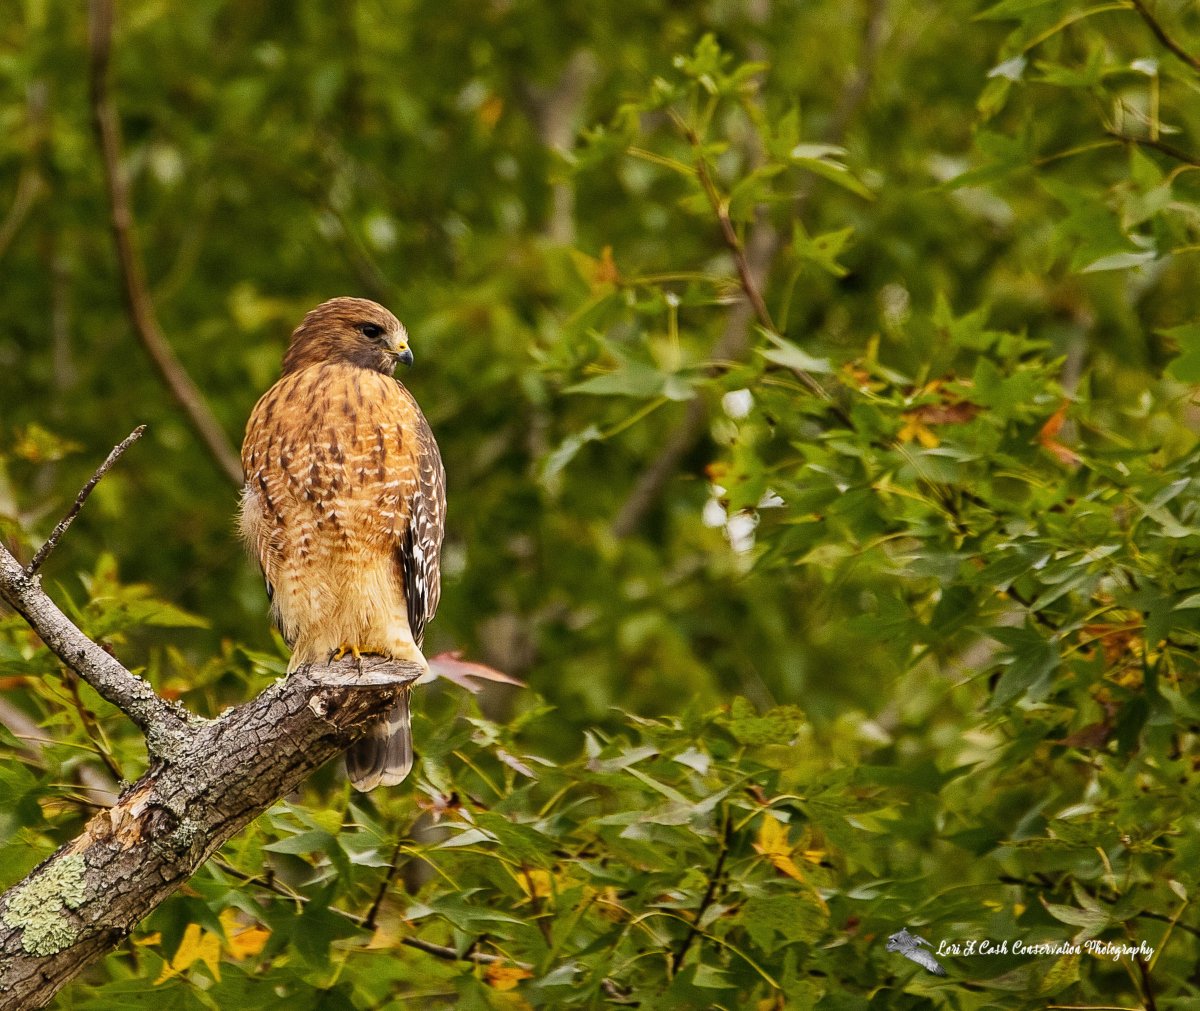 Red-shouldered hawk sitting in tree on an autumn morning in Williamsburg, Virginia.
#redshoulderedhawk #Hawks #raptors #birds #TwitterNatureCommunity #birdphotography 

loriacash.com